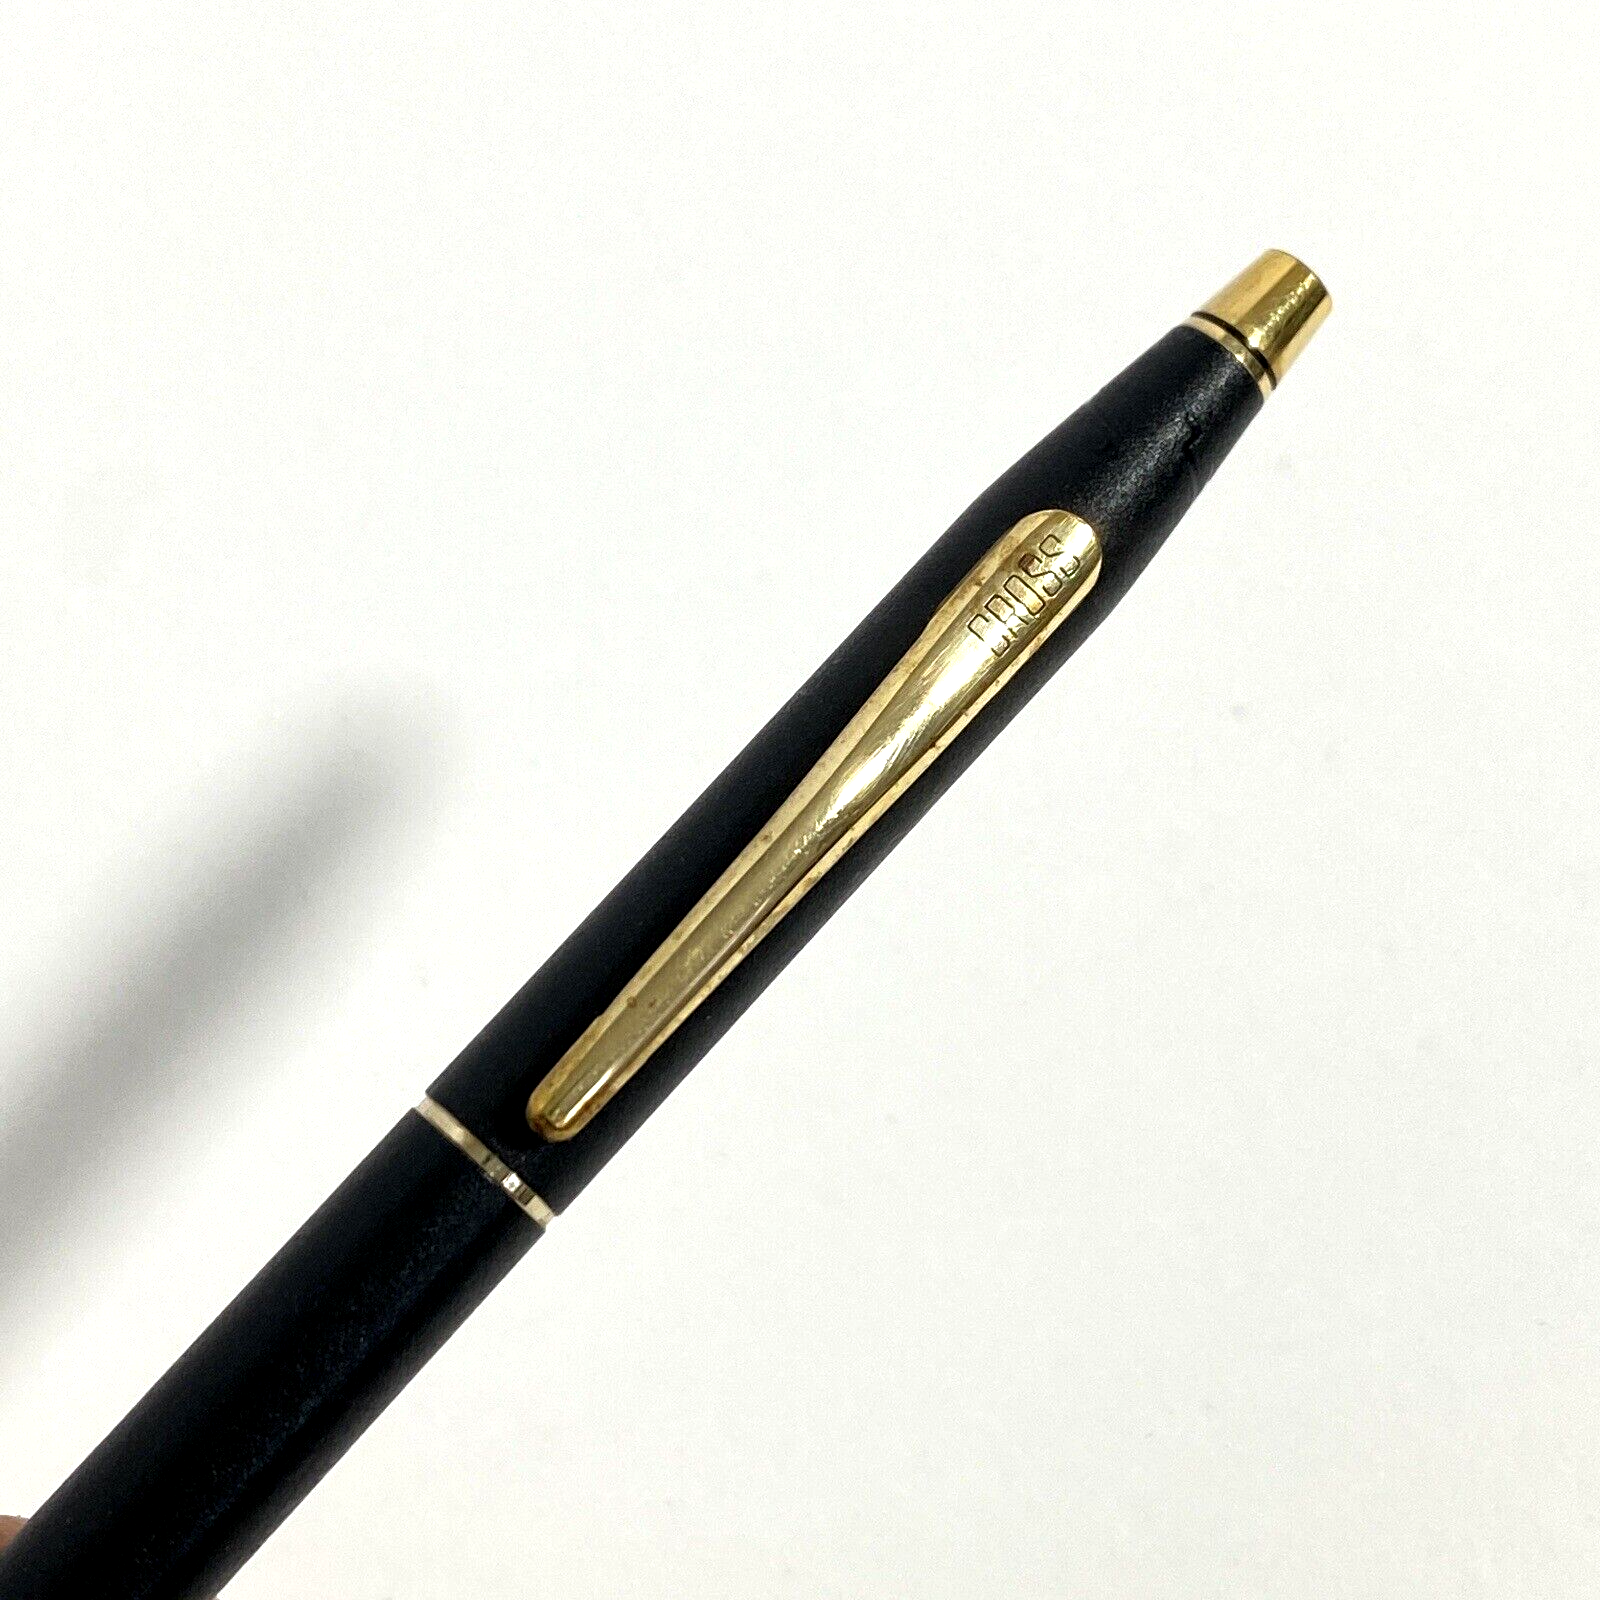 Vintage Cross Black With Gold Trim Ballpoint Pen Good Working Condition W/logo - $29.95